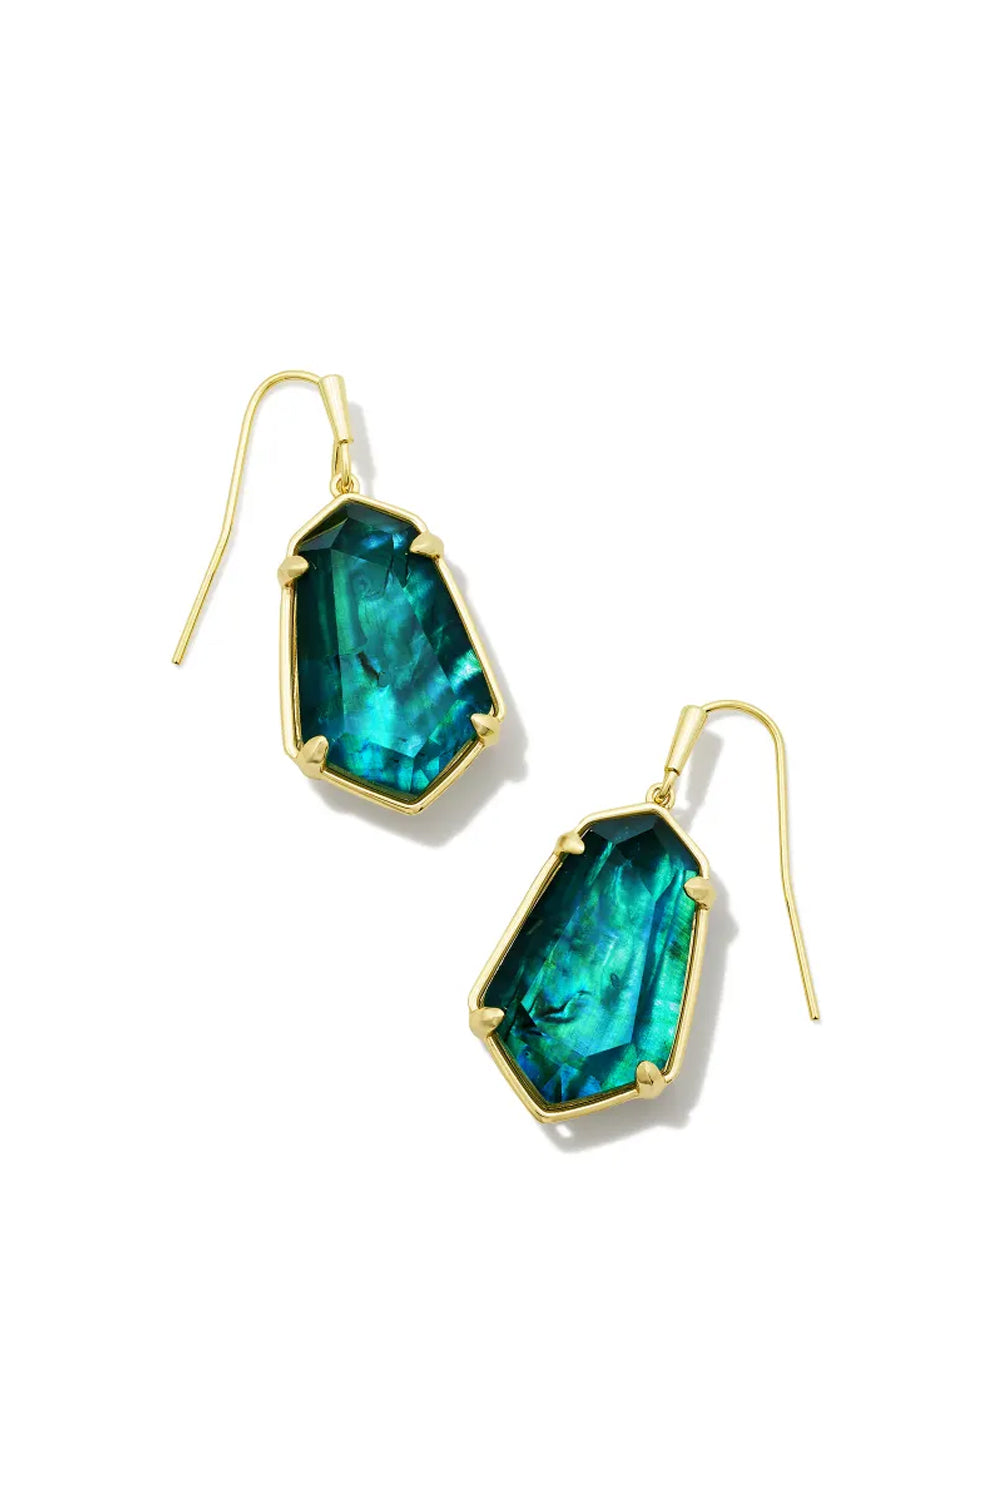 Kendra Scott: Alexandria Gold Drop Earrings - Teal Green Illusion | Makk Fashions